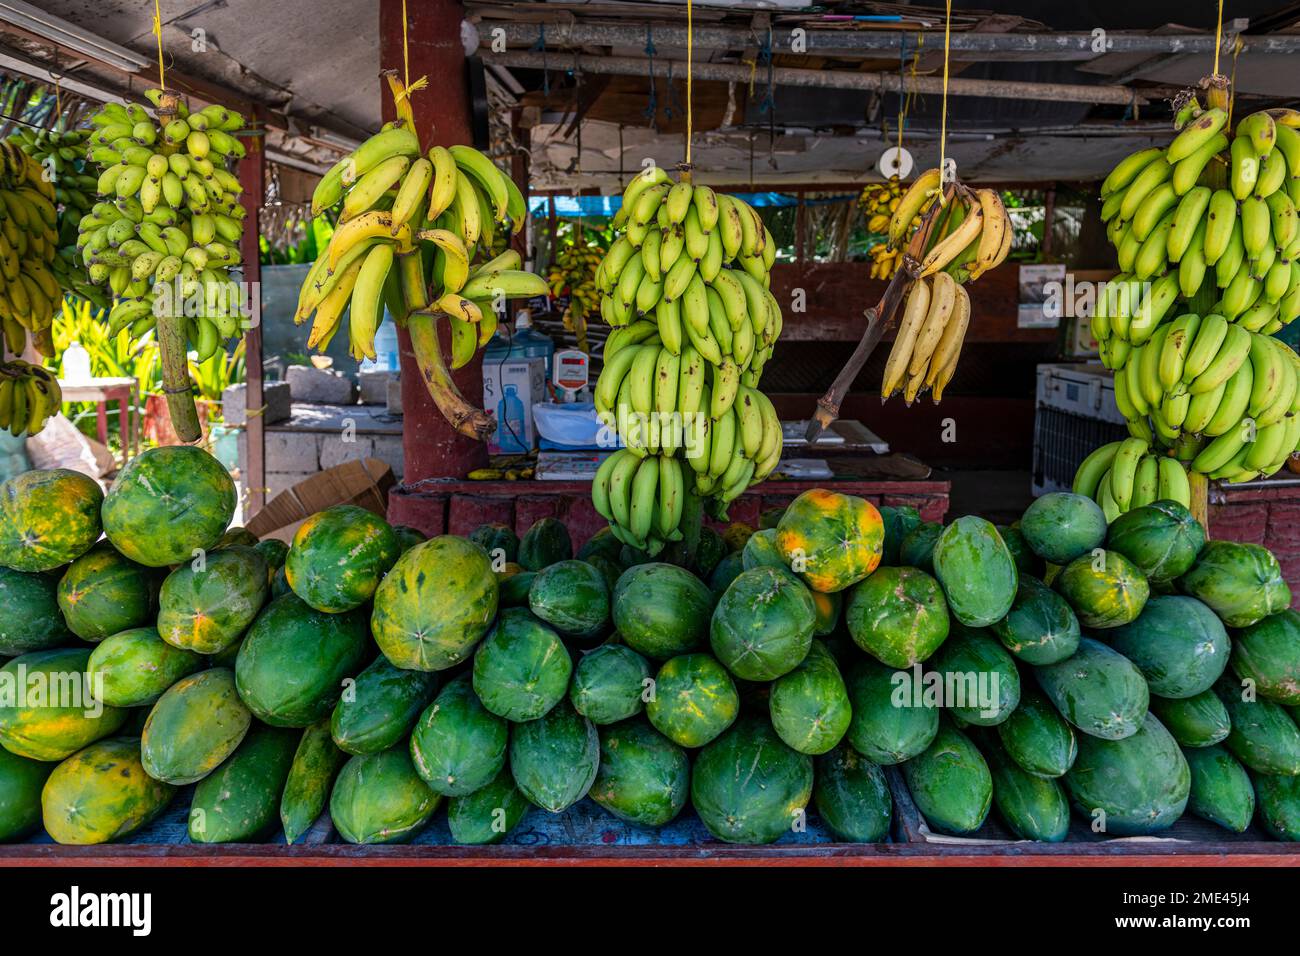 Oman, Dhofar, Salalah, Stall with fresh papayas and bananas Stock Photo